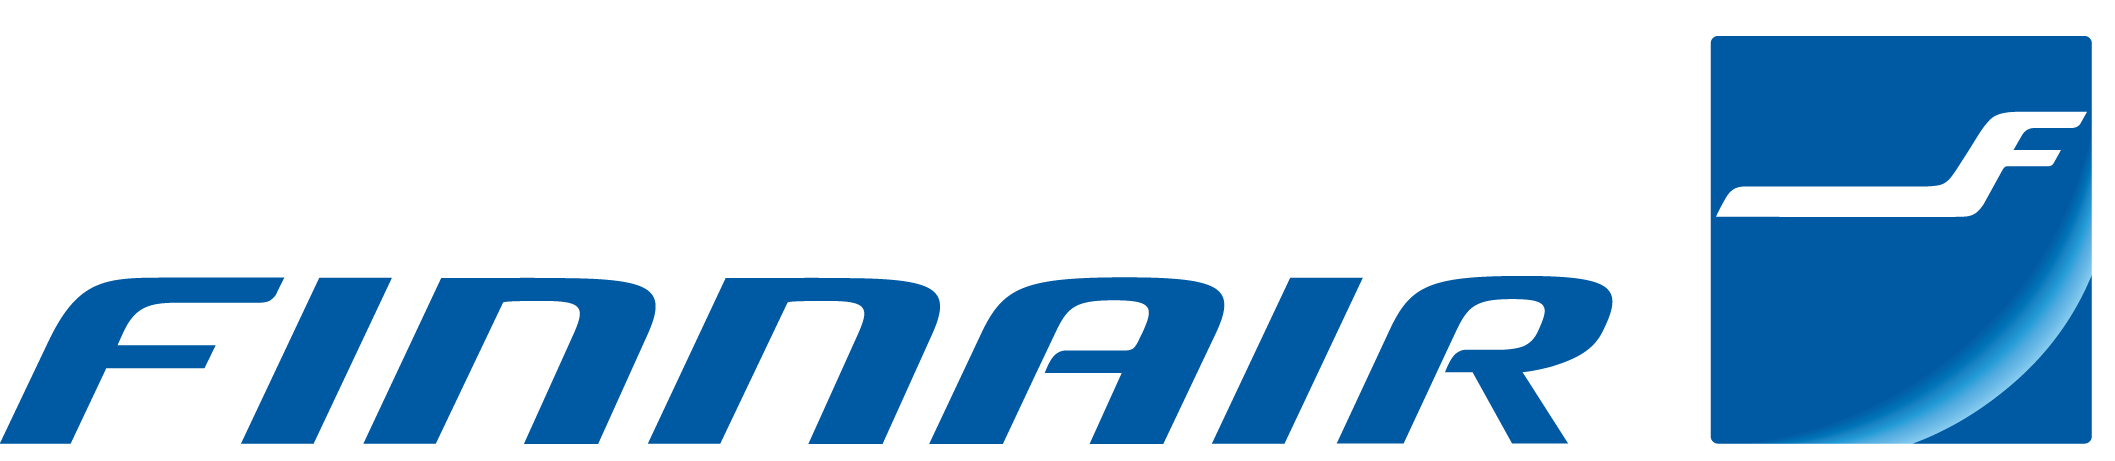 Finnair_logo